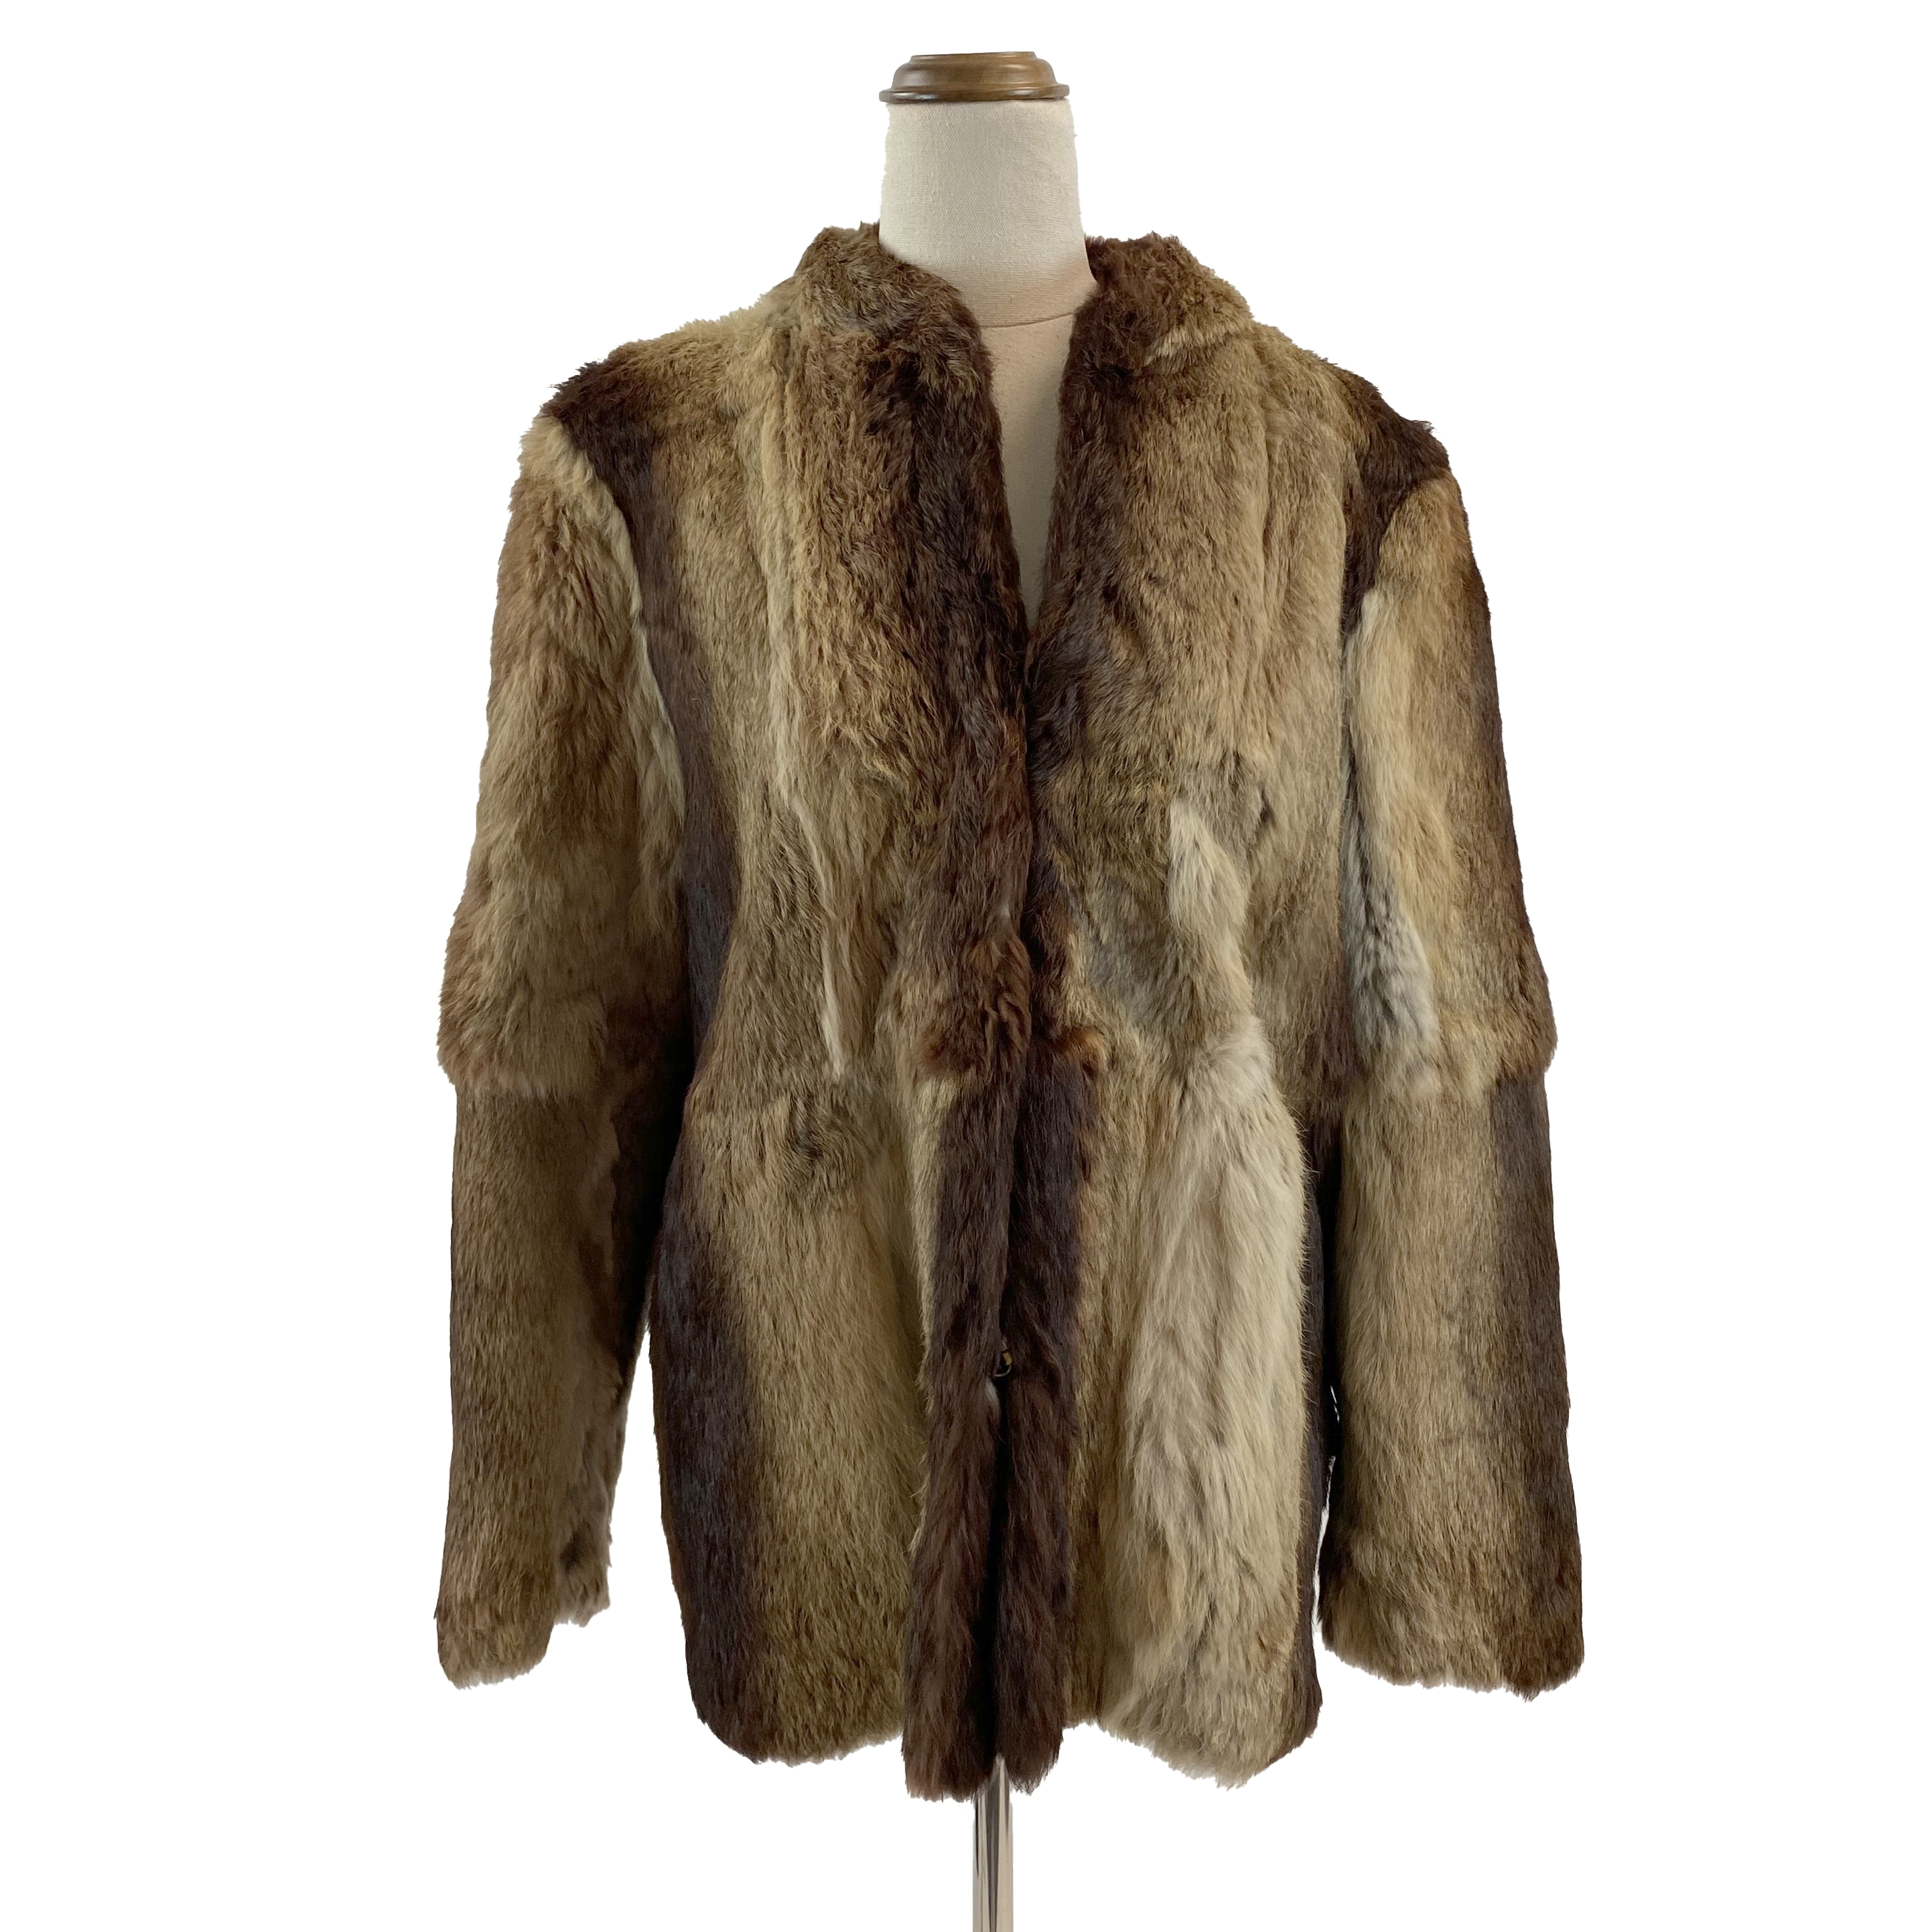 Vintage 70s Rabbit Fur Coat